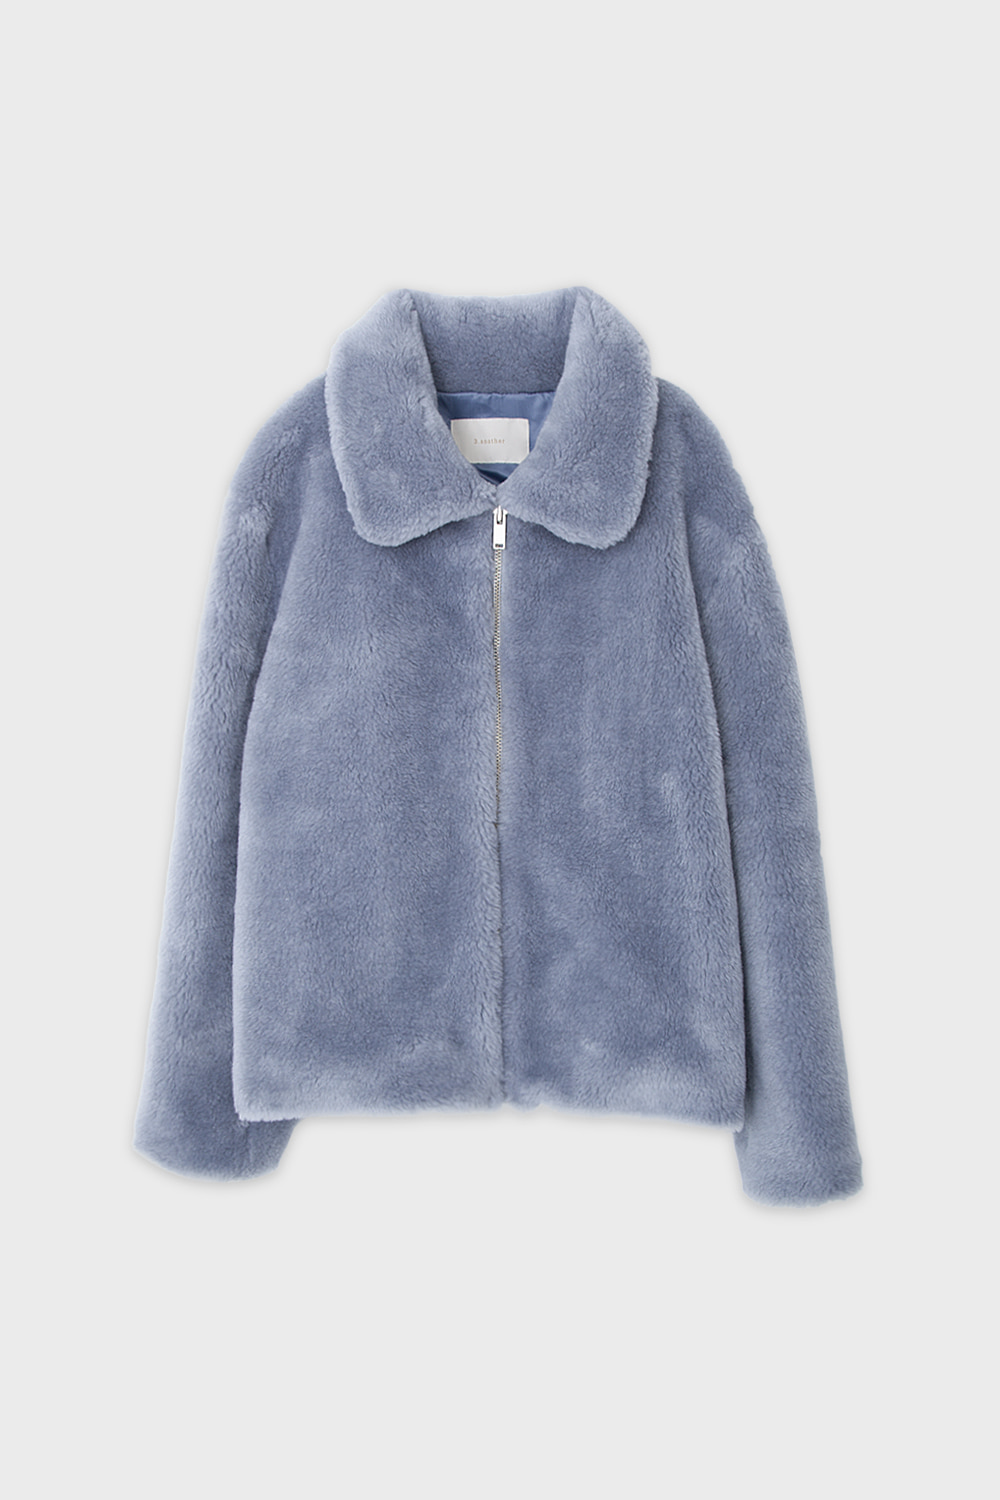 Fur Cropped Jacket Blue